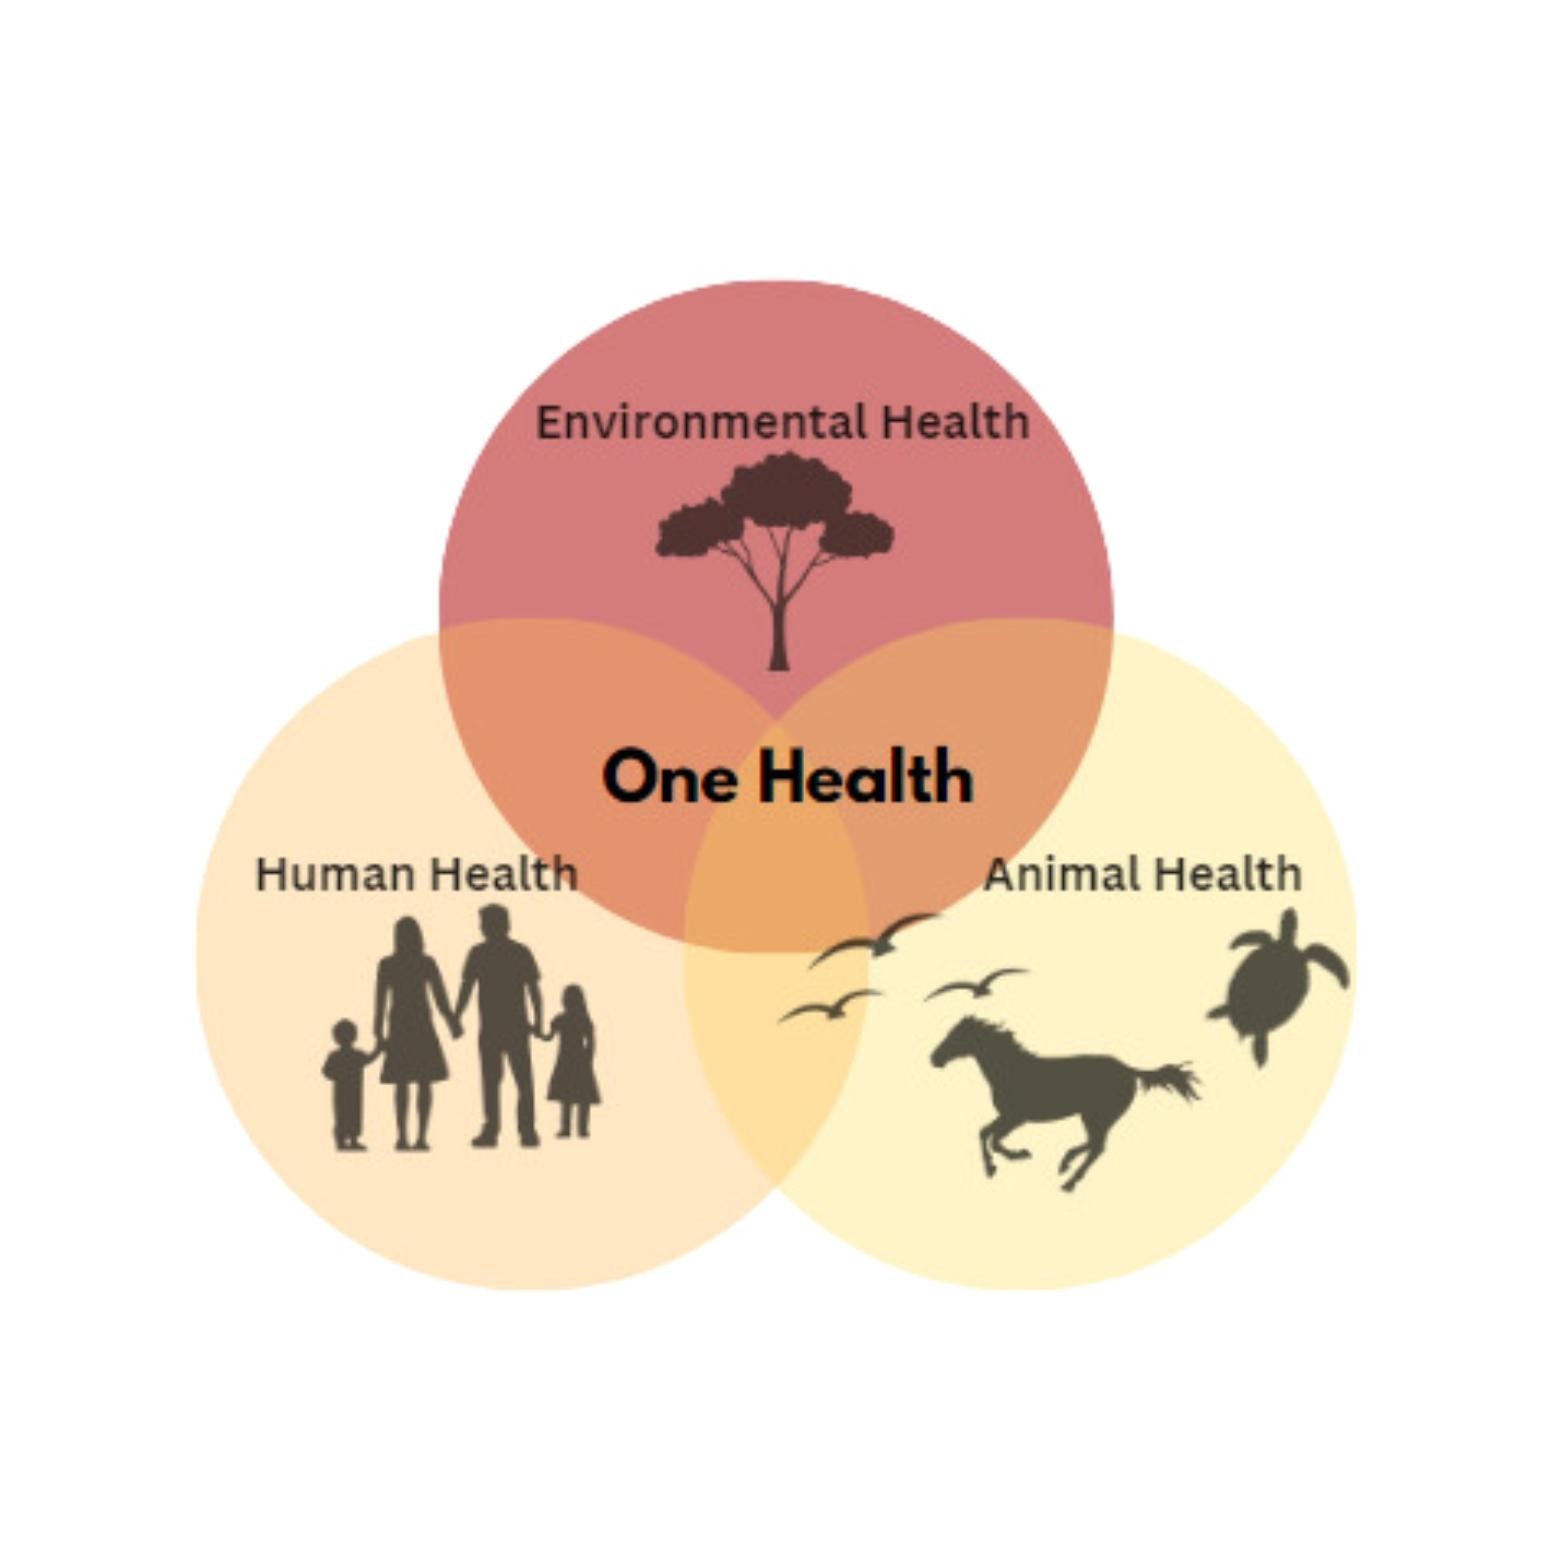 One Health encompasses environment, human, and animal health.